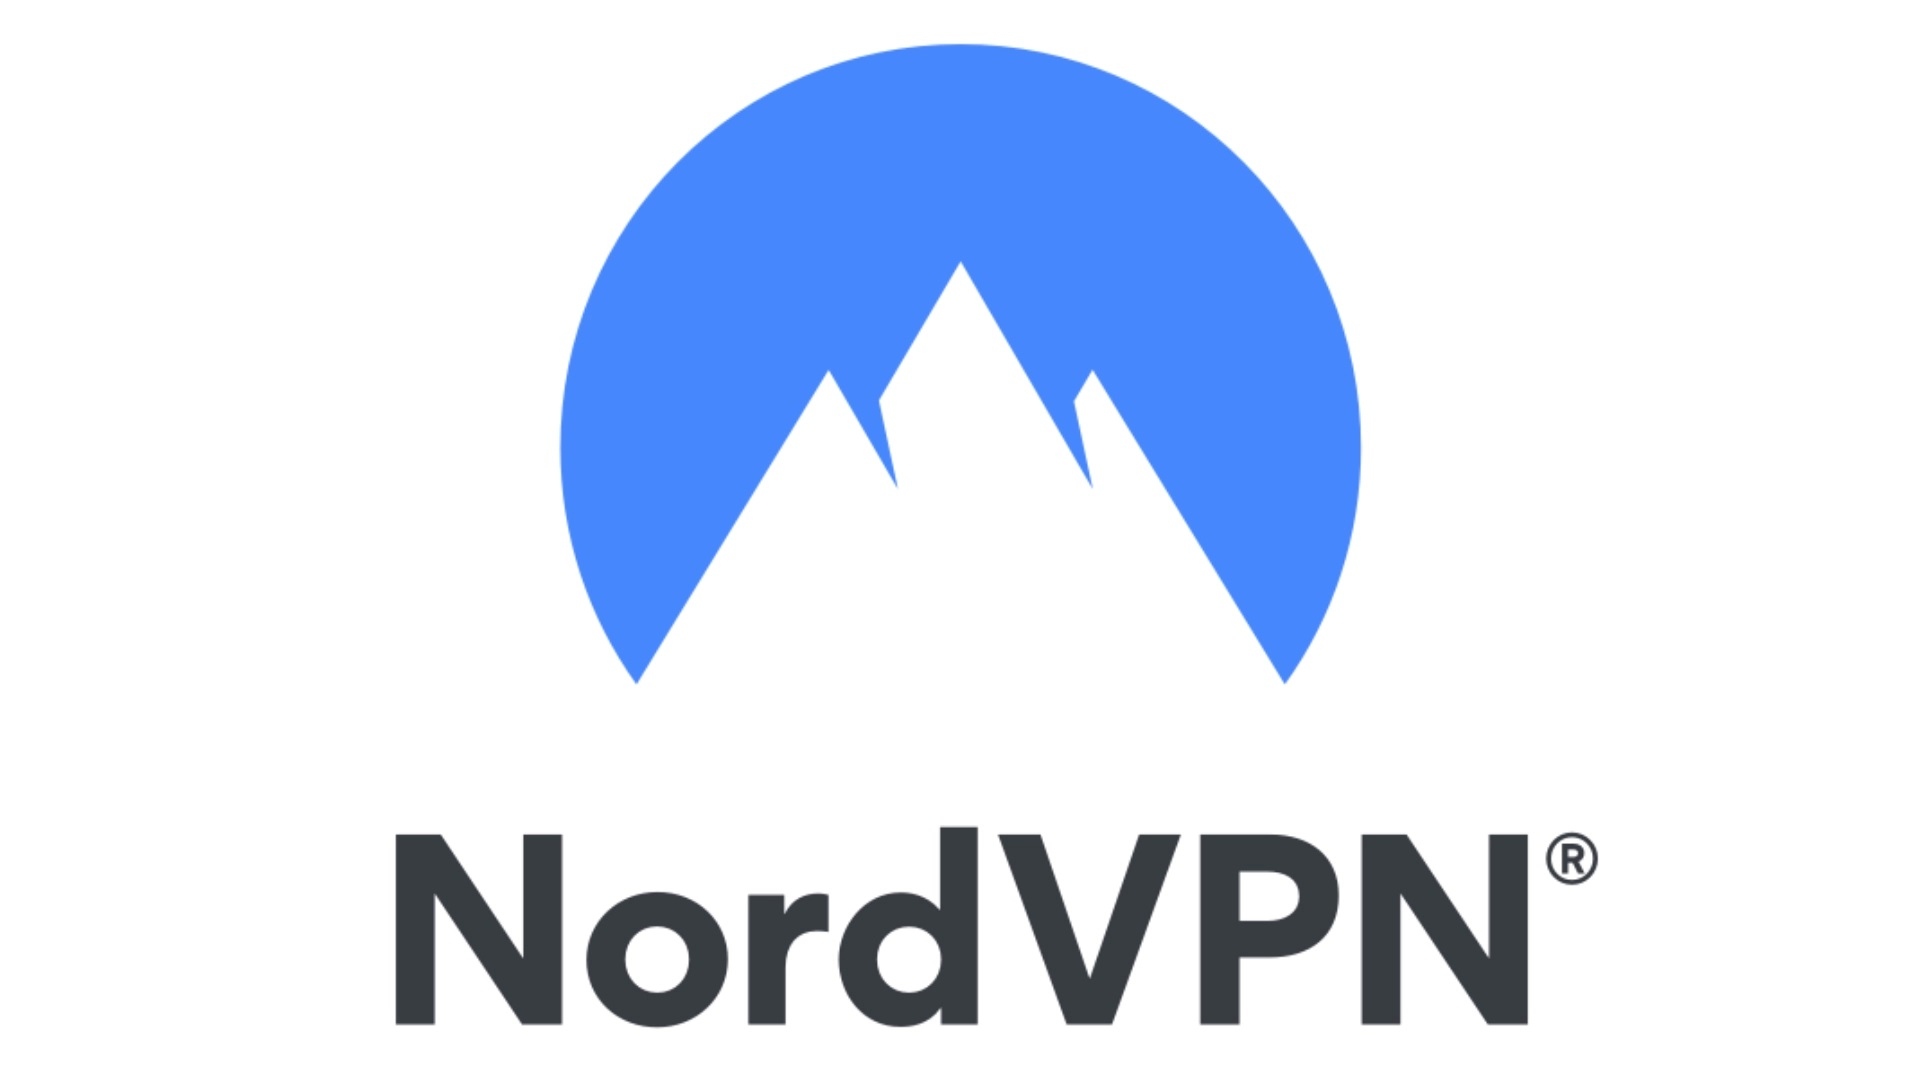 Best Amazon Prime VPN: NordVPN. Image shows the company logo.